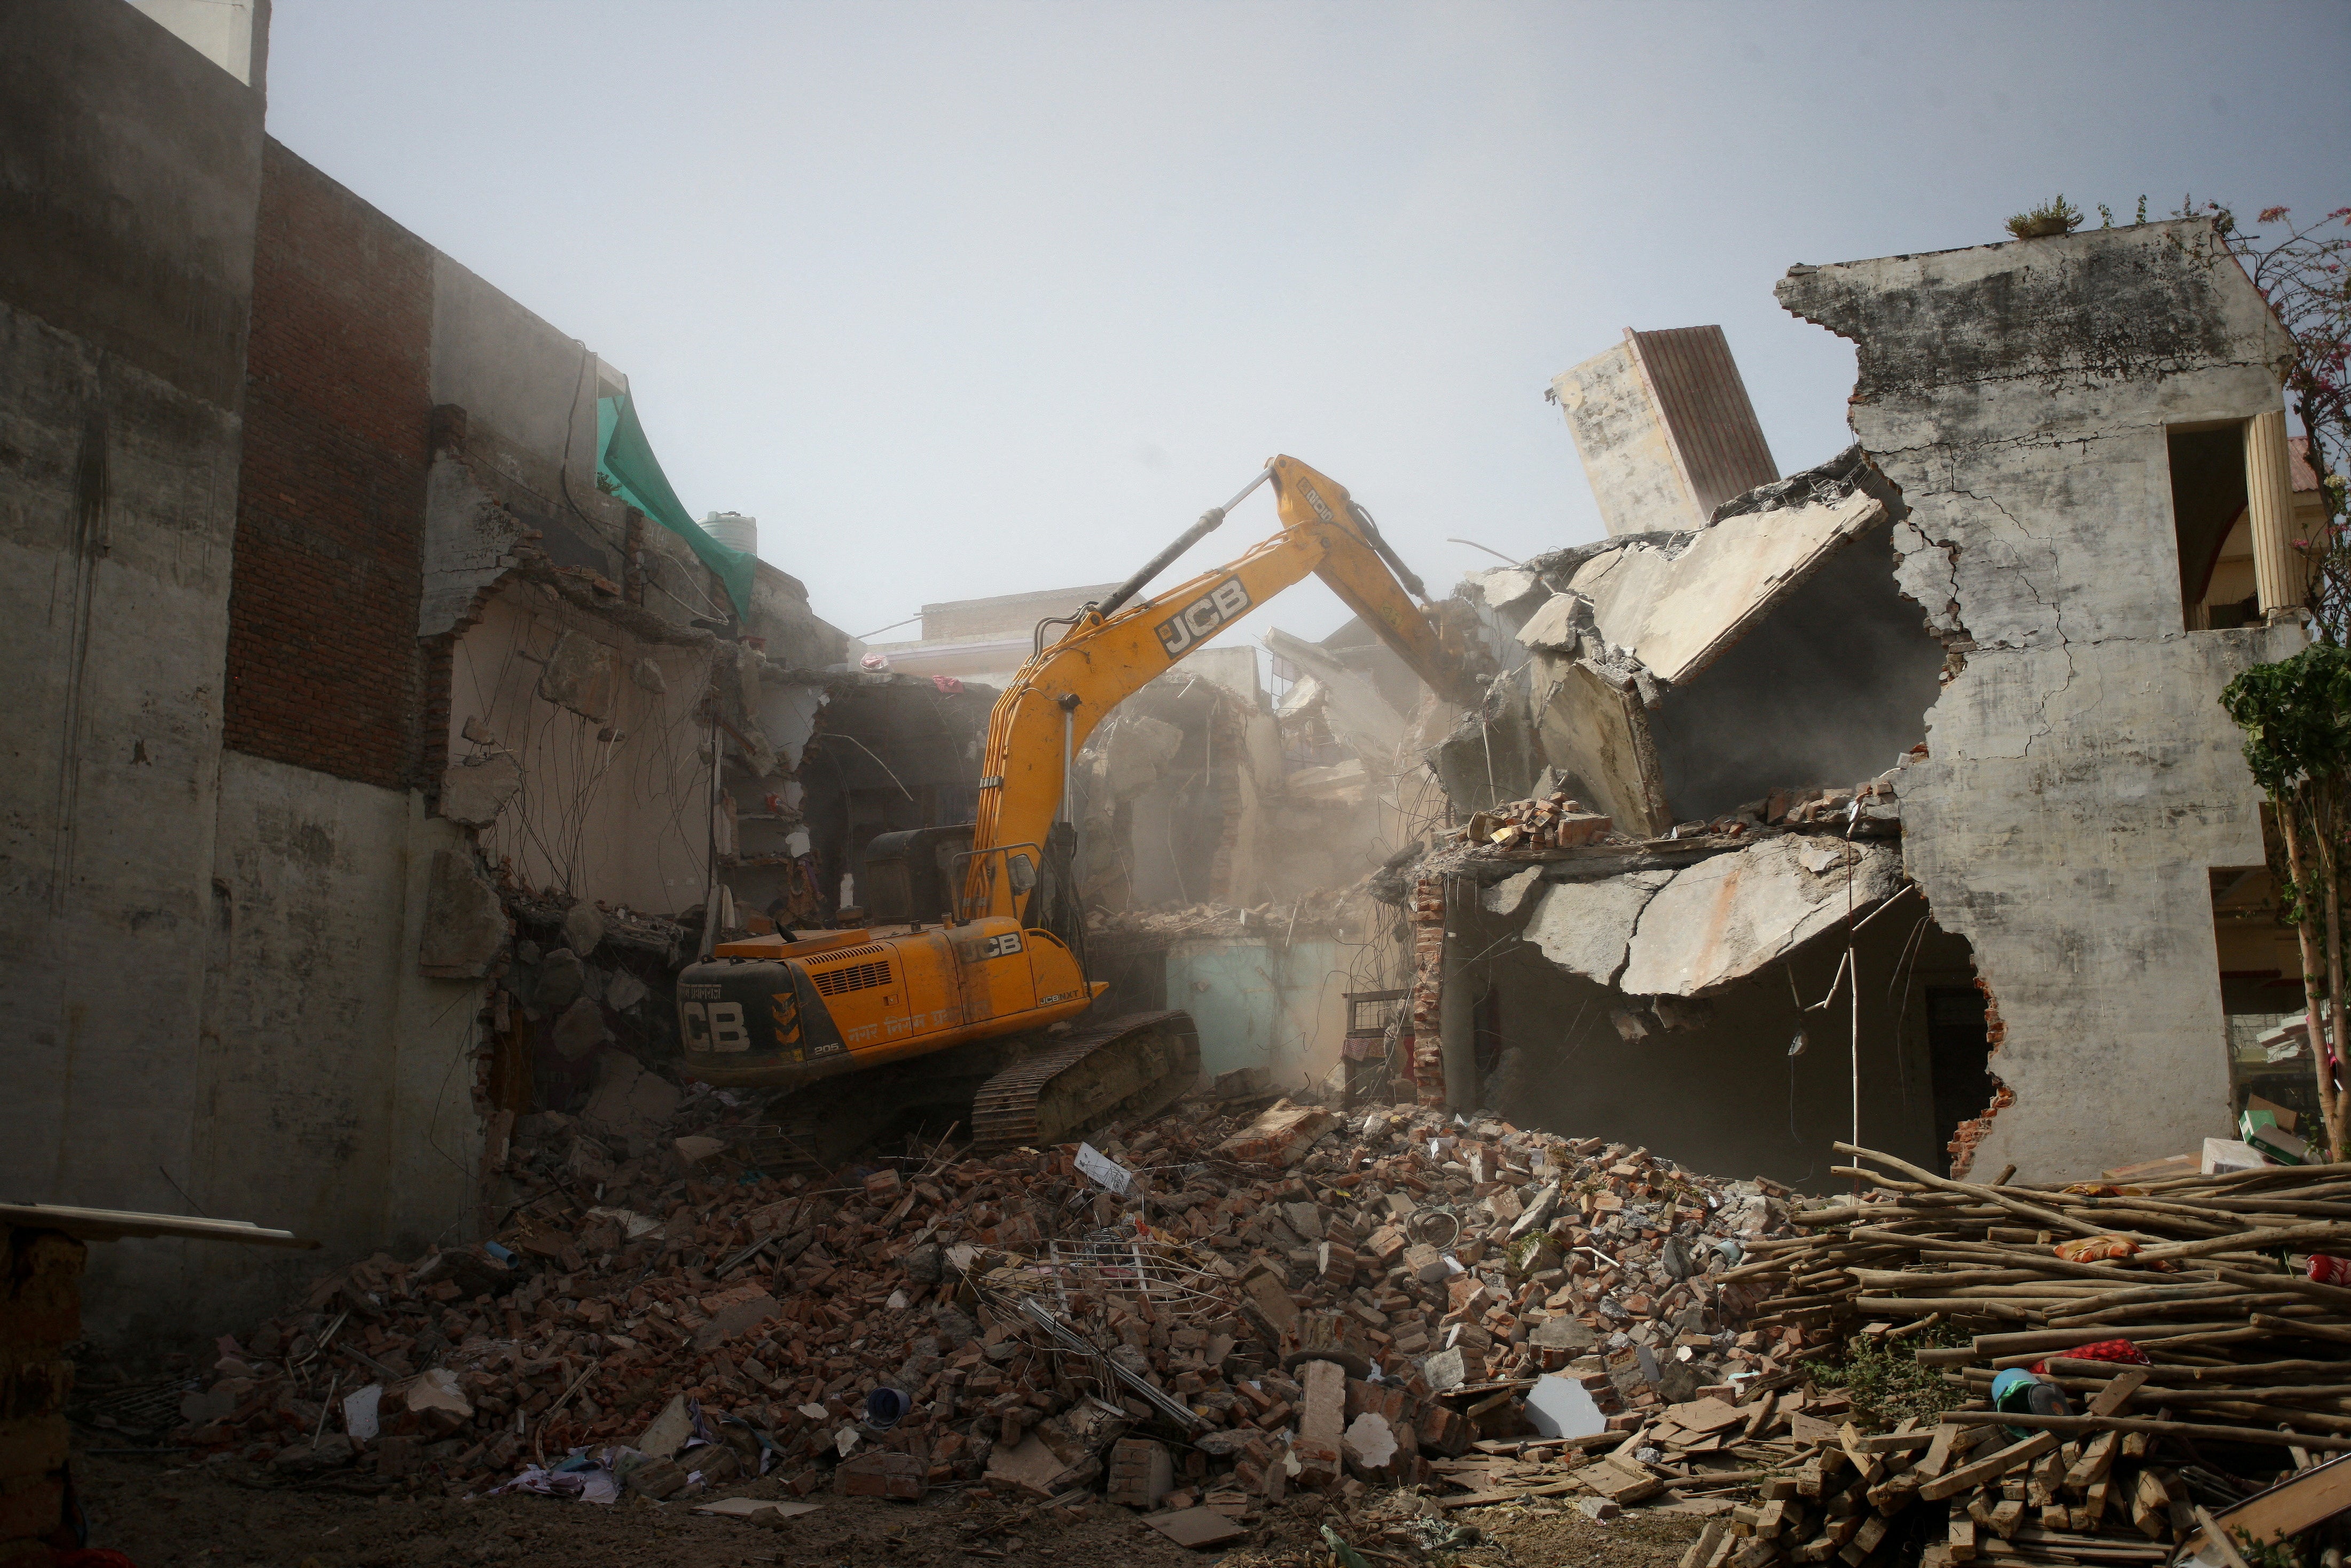 A bulldozer demolishes the house of a Muslim man in Uttar Pradesh